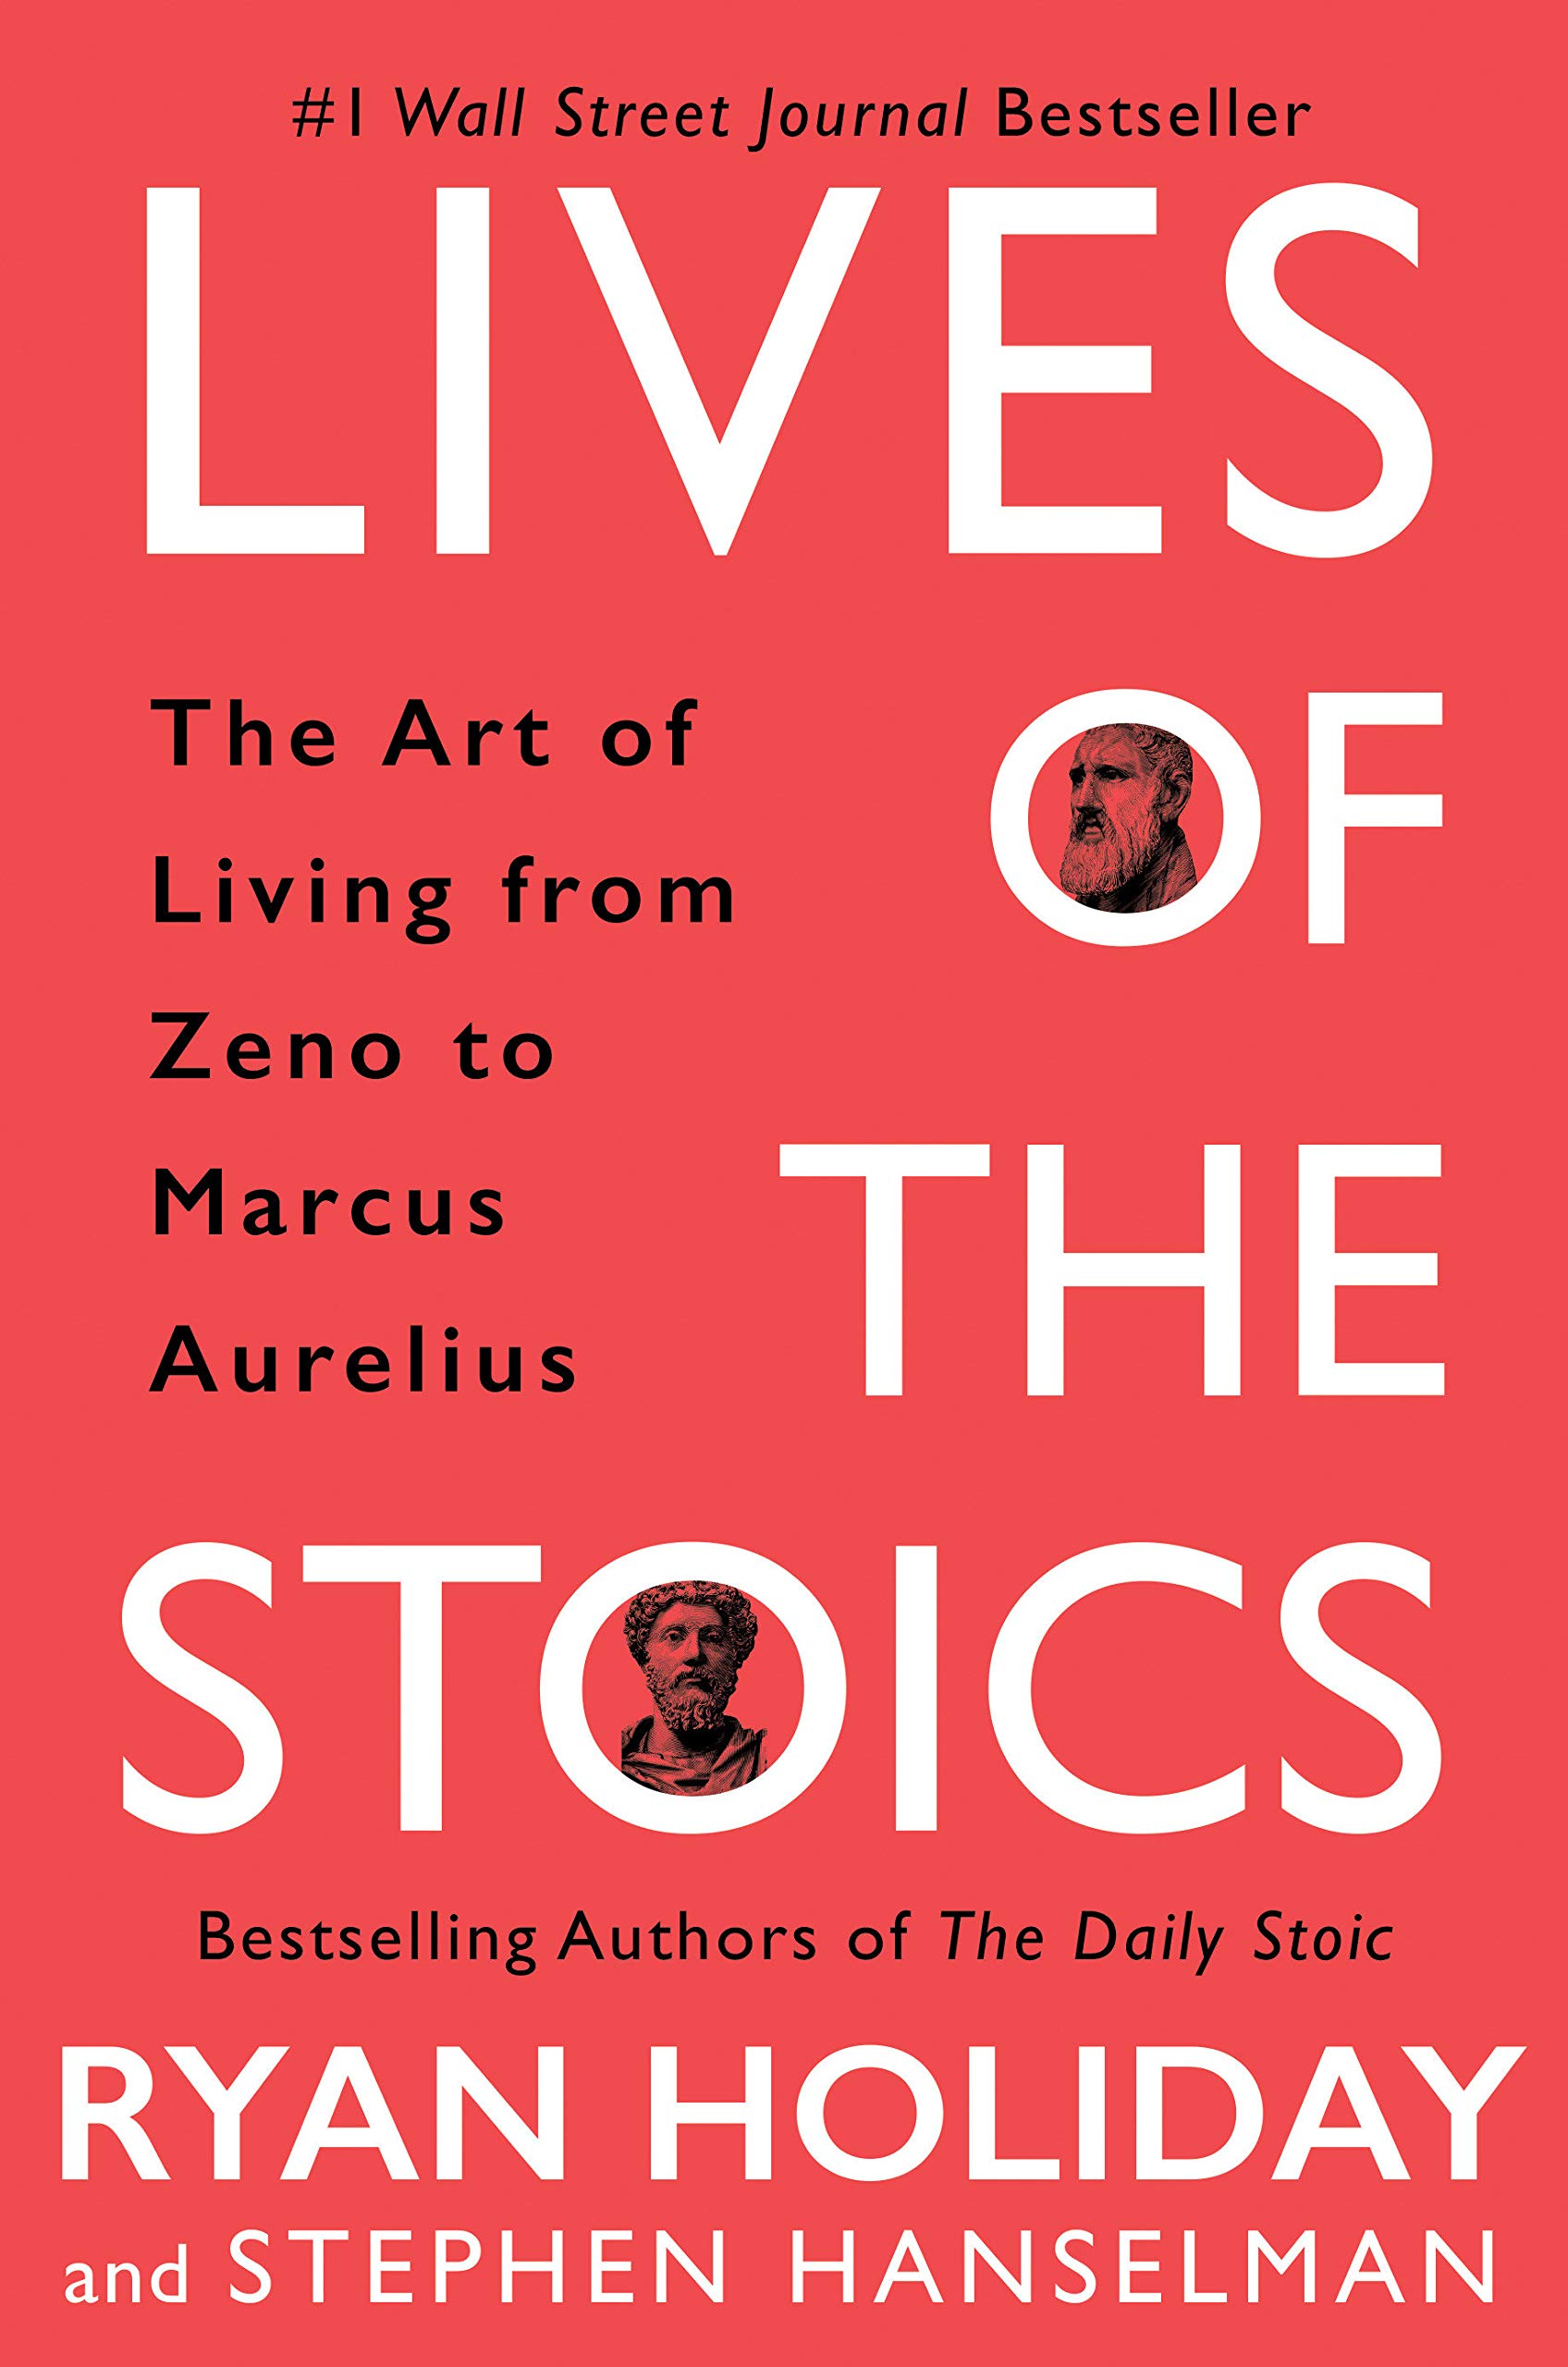 https://www.amazon.com/Lives-Stoics-Living-Marcus-Aurelius/dp/052554187X/ref=tmm_hrd_swatch_0?_encoding=UTF8&qid=&sr=